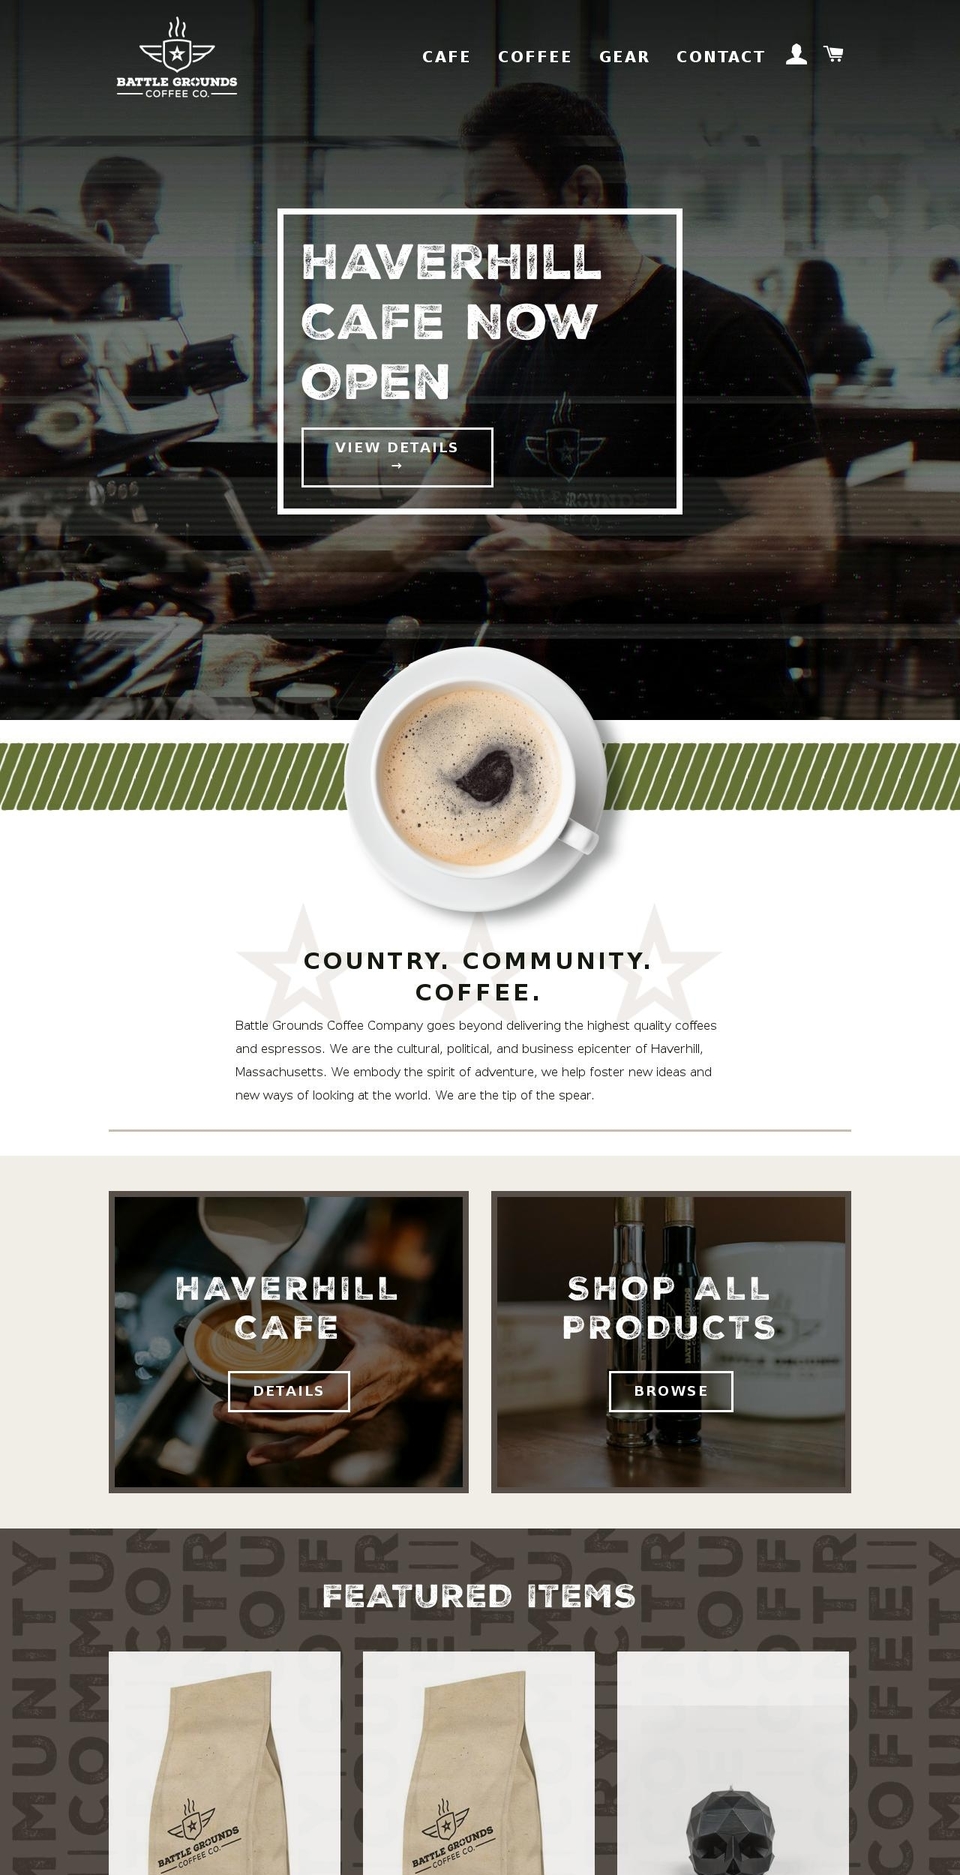 Battle Grounds Coffee Co Shopify theme site example battlegroundscafe.com